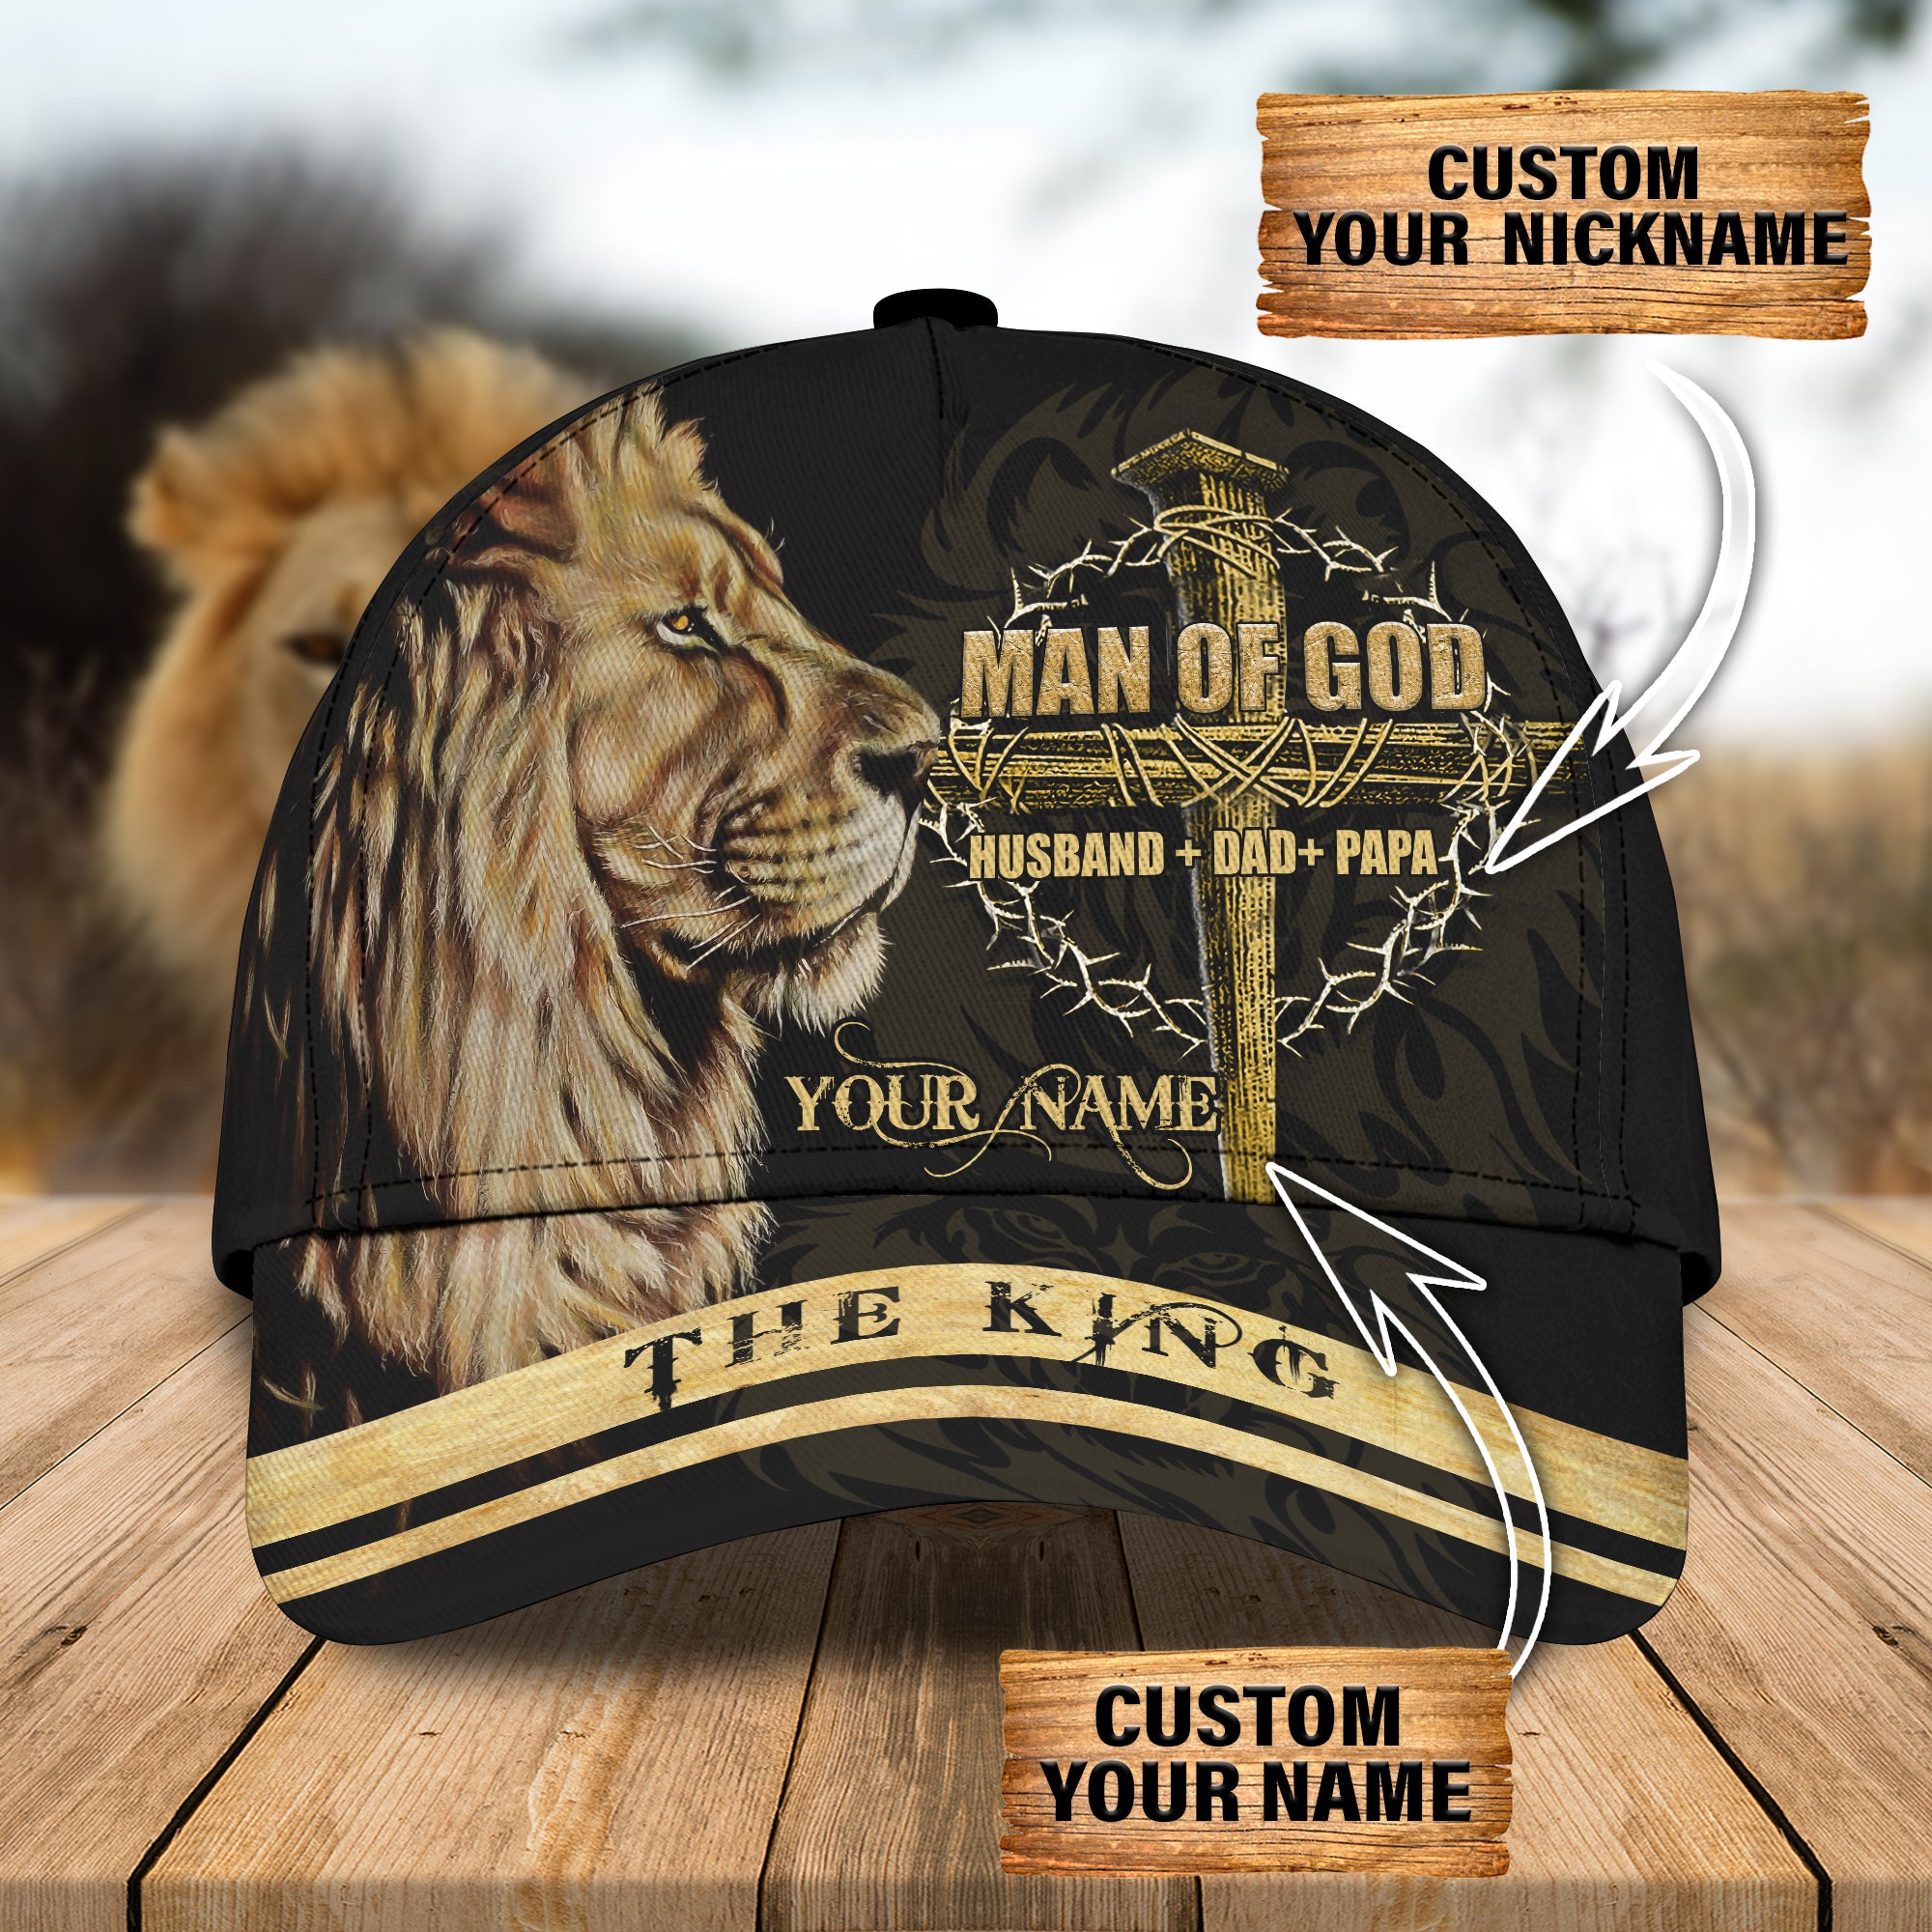 Man Of God - Personalized Name Cap 17 - Bhn97 7